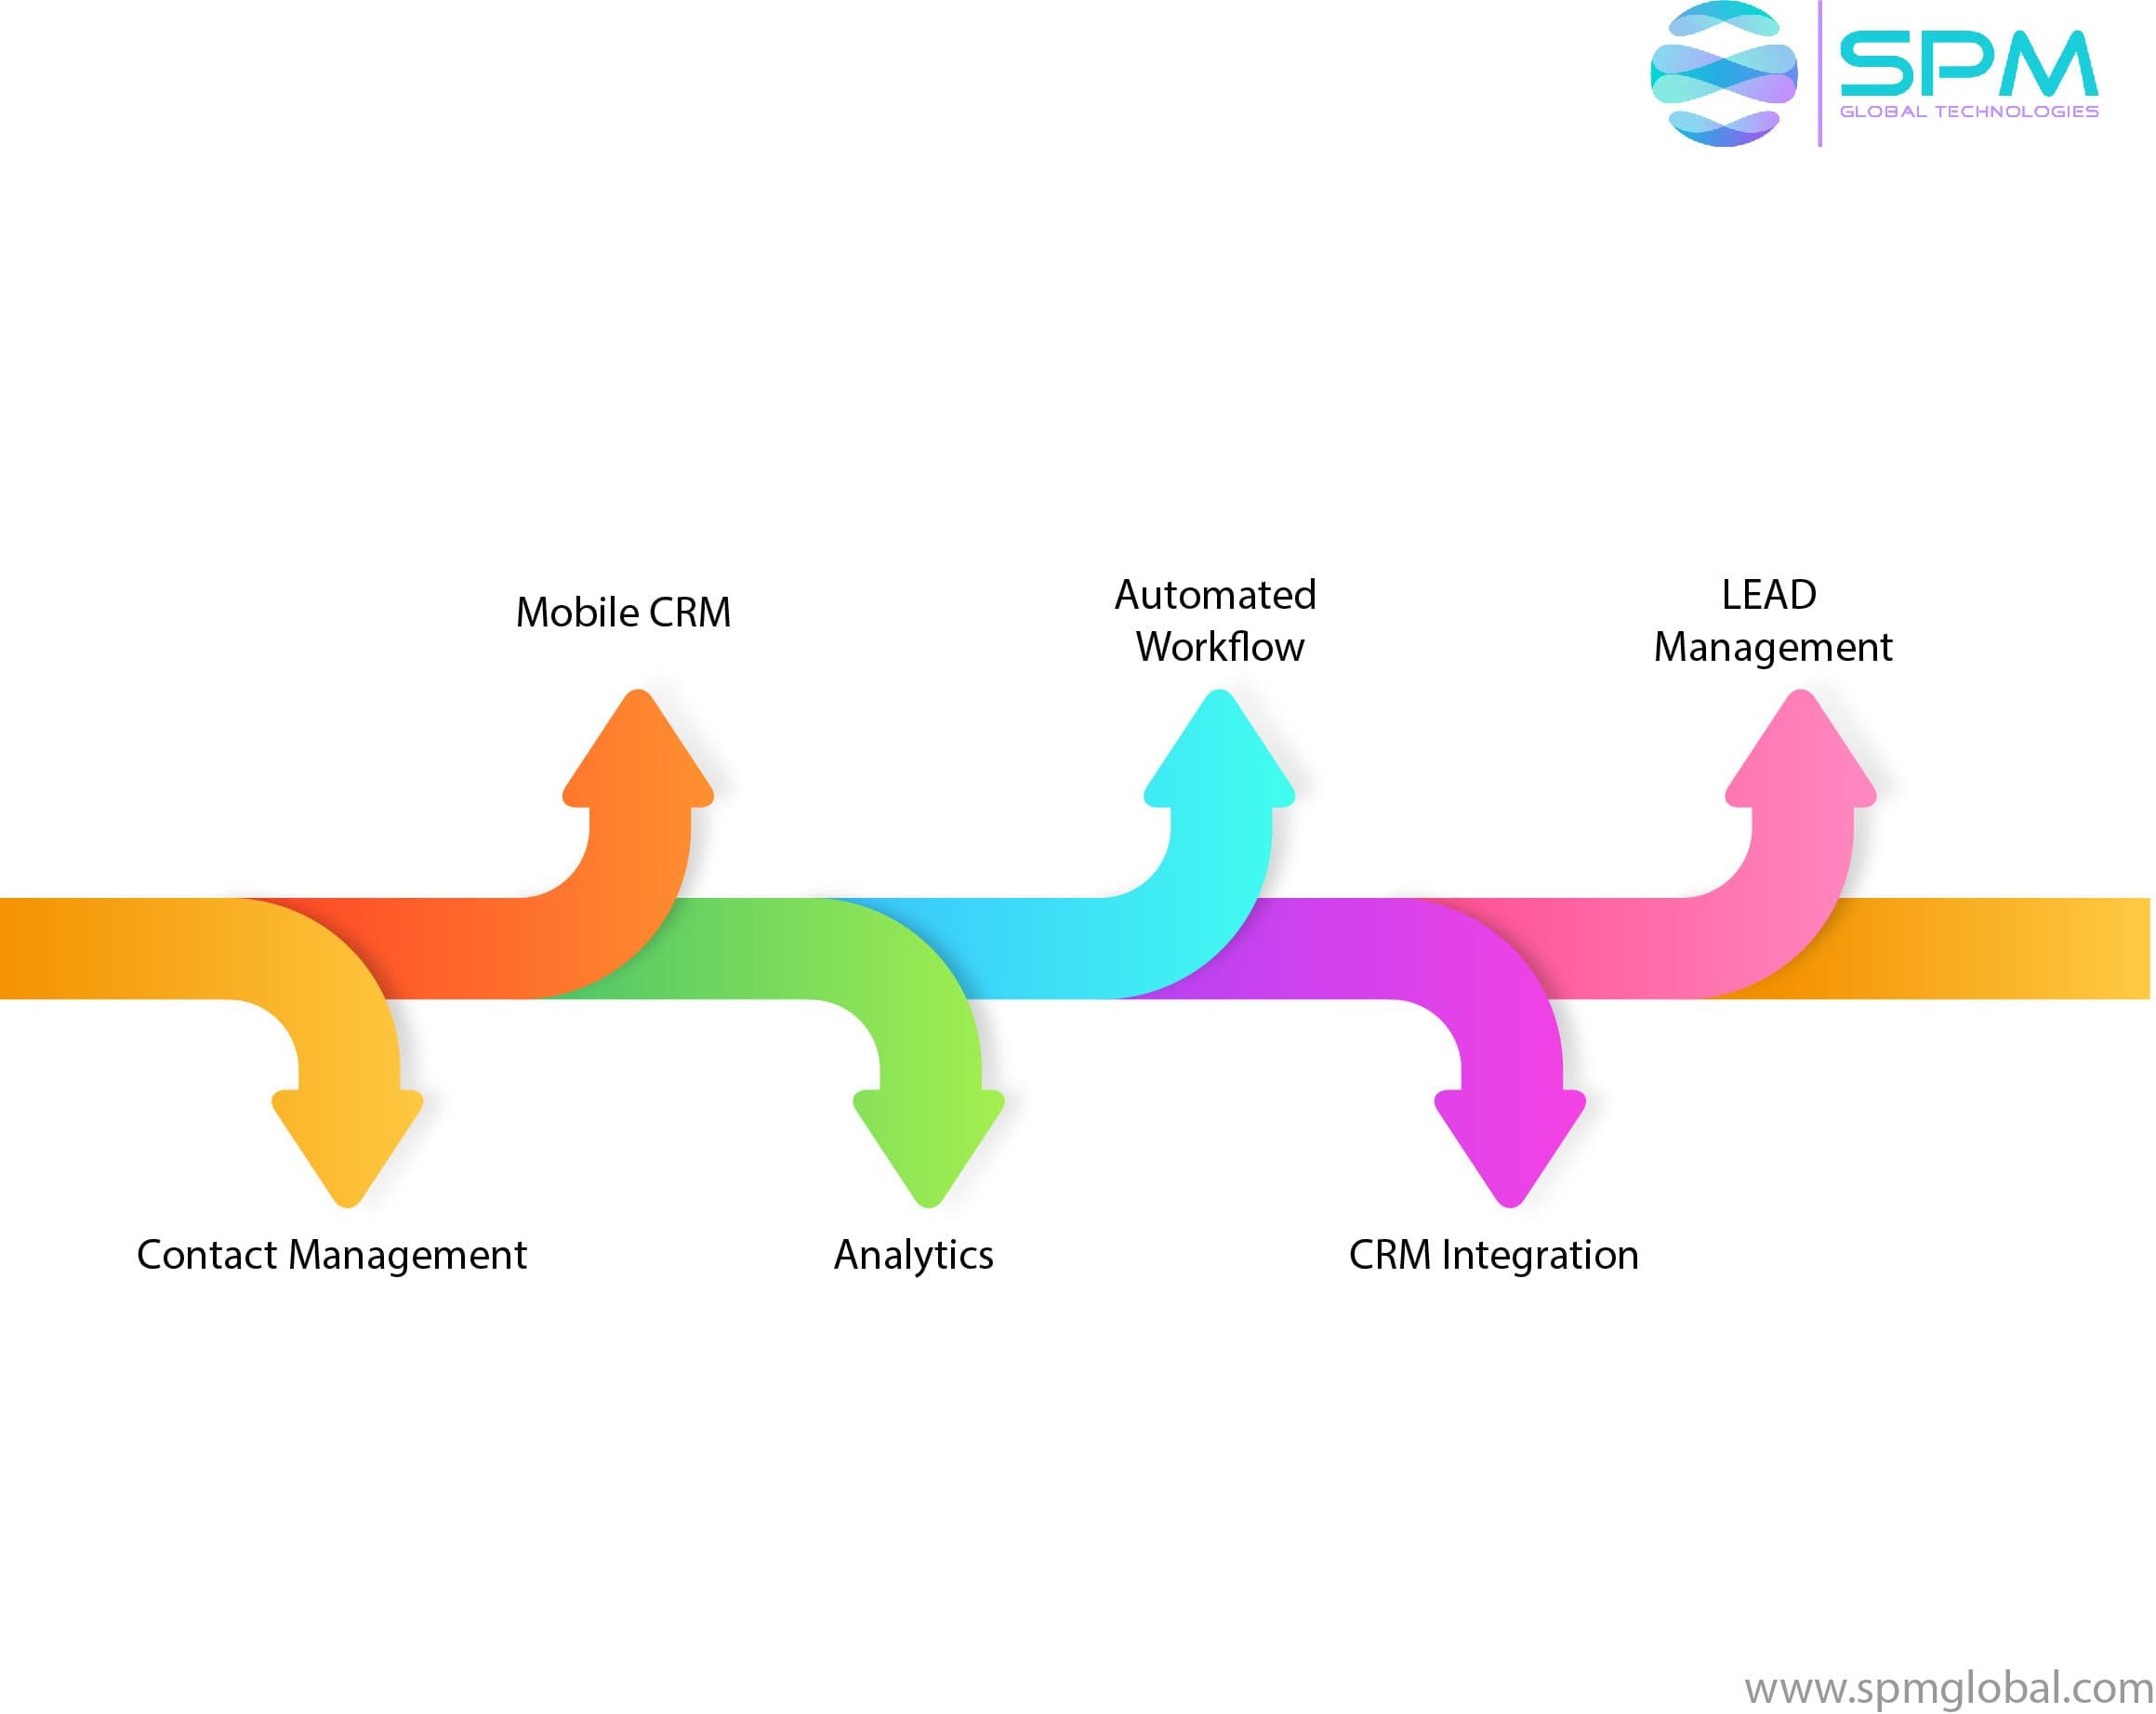 SAP CRM service providers